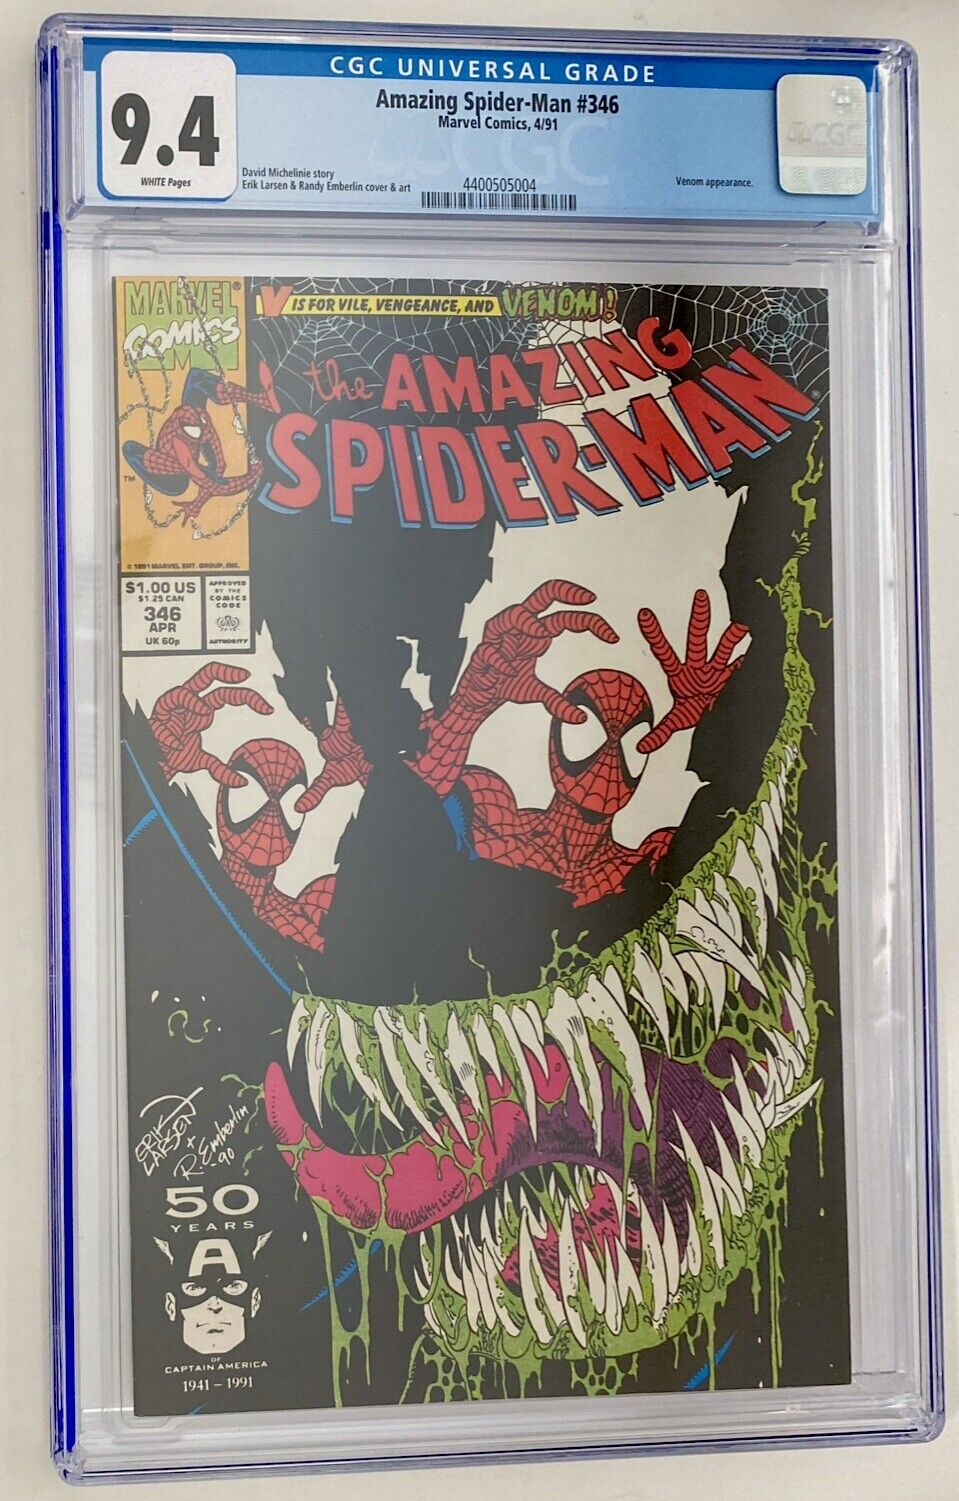 Amazing Spider-Man #346 Marvel Comics 4/91 CGC 9.4 White Pages. Fresh Grade